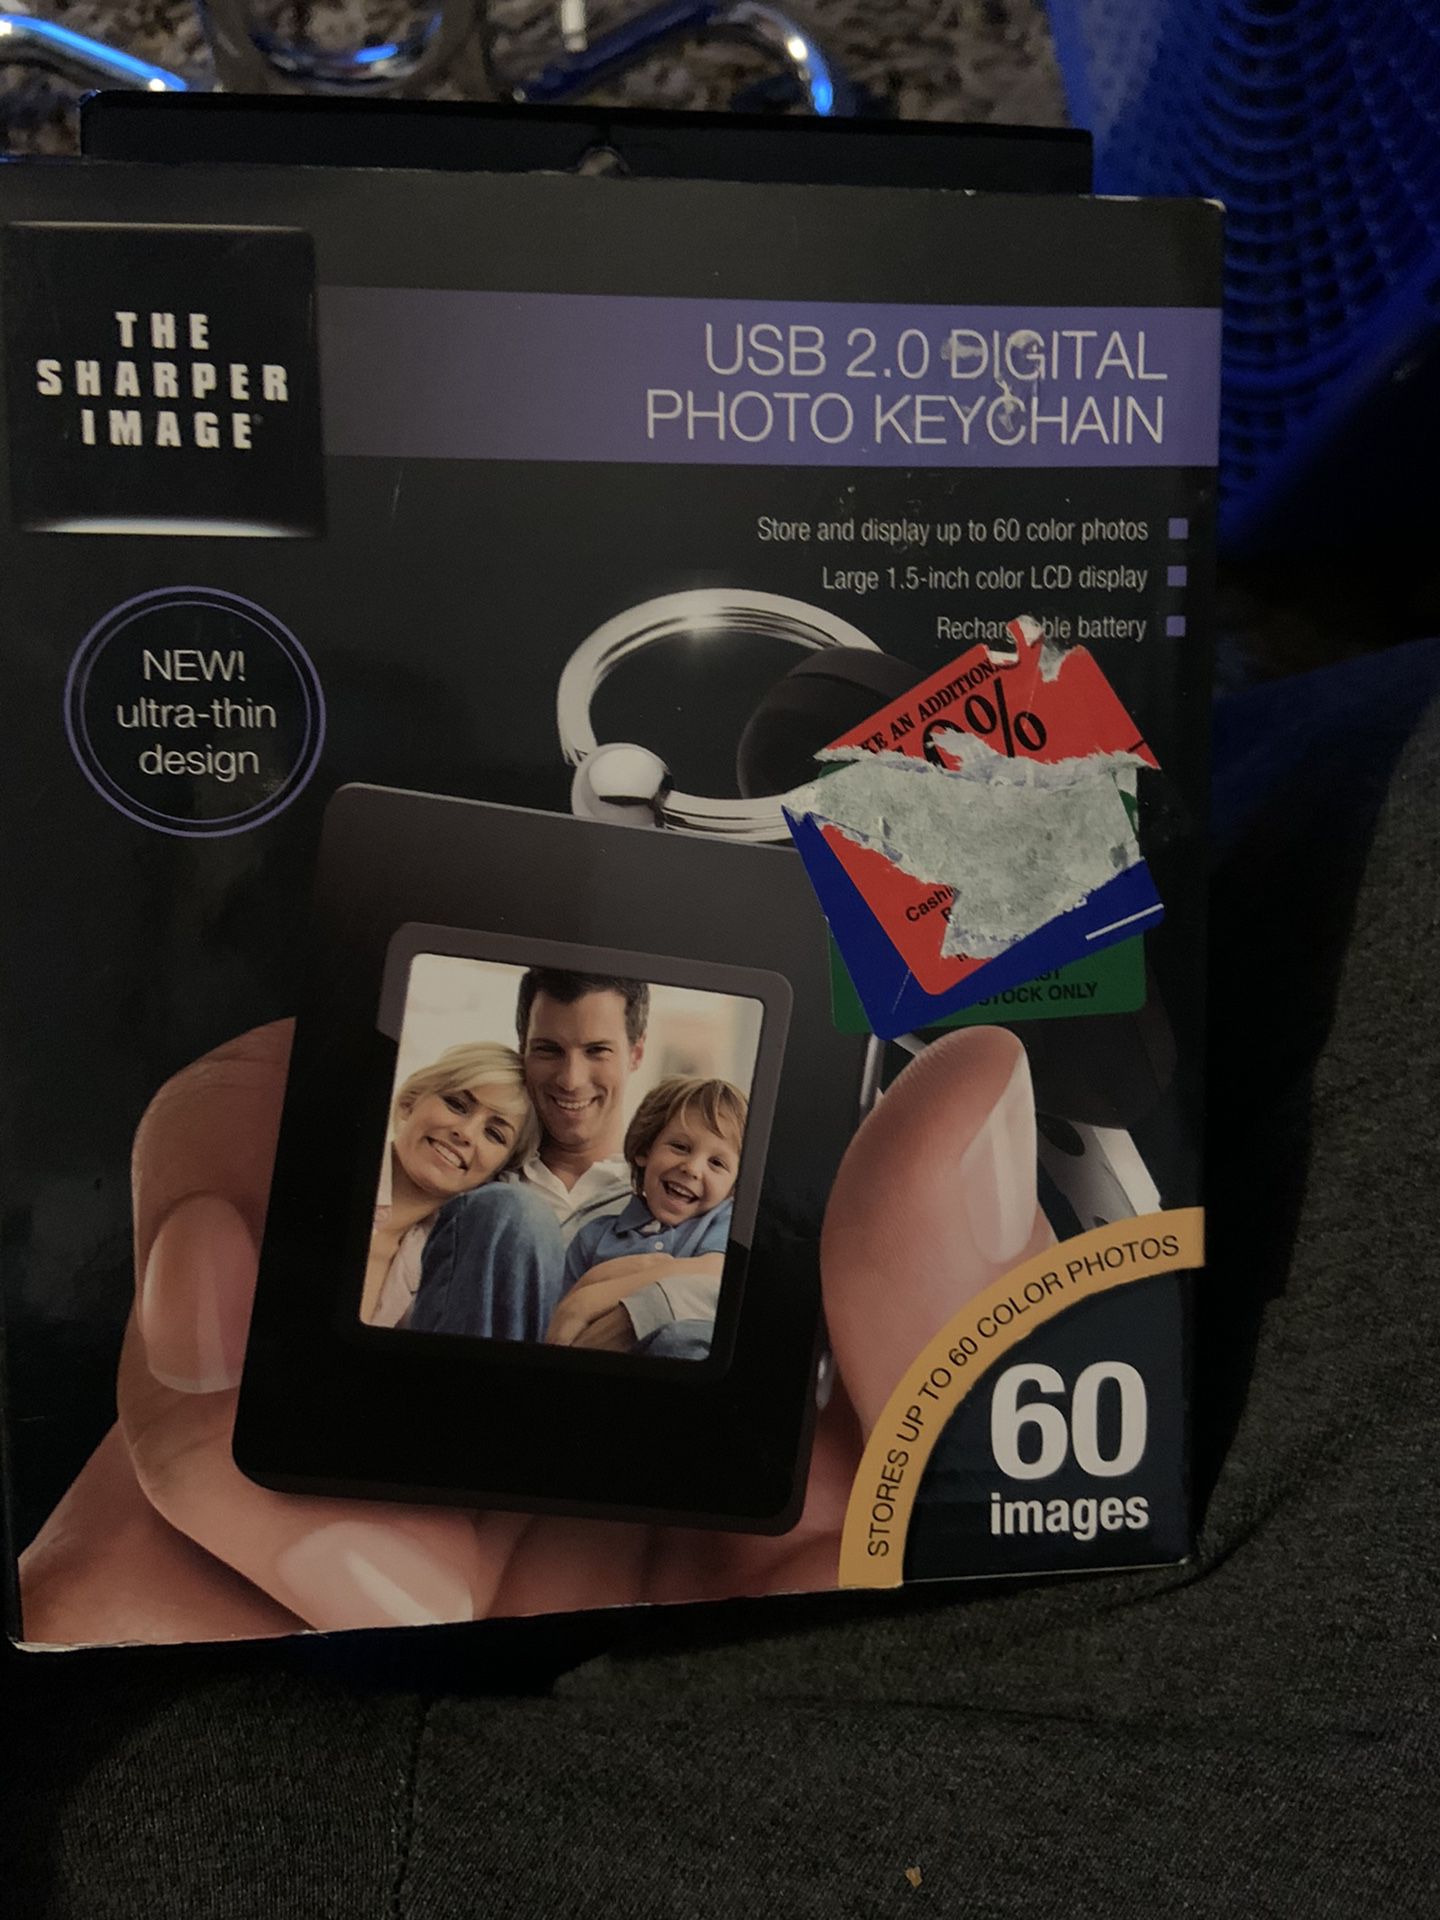 USB 2.0 digital photo keychain new in box never used